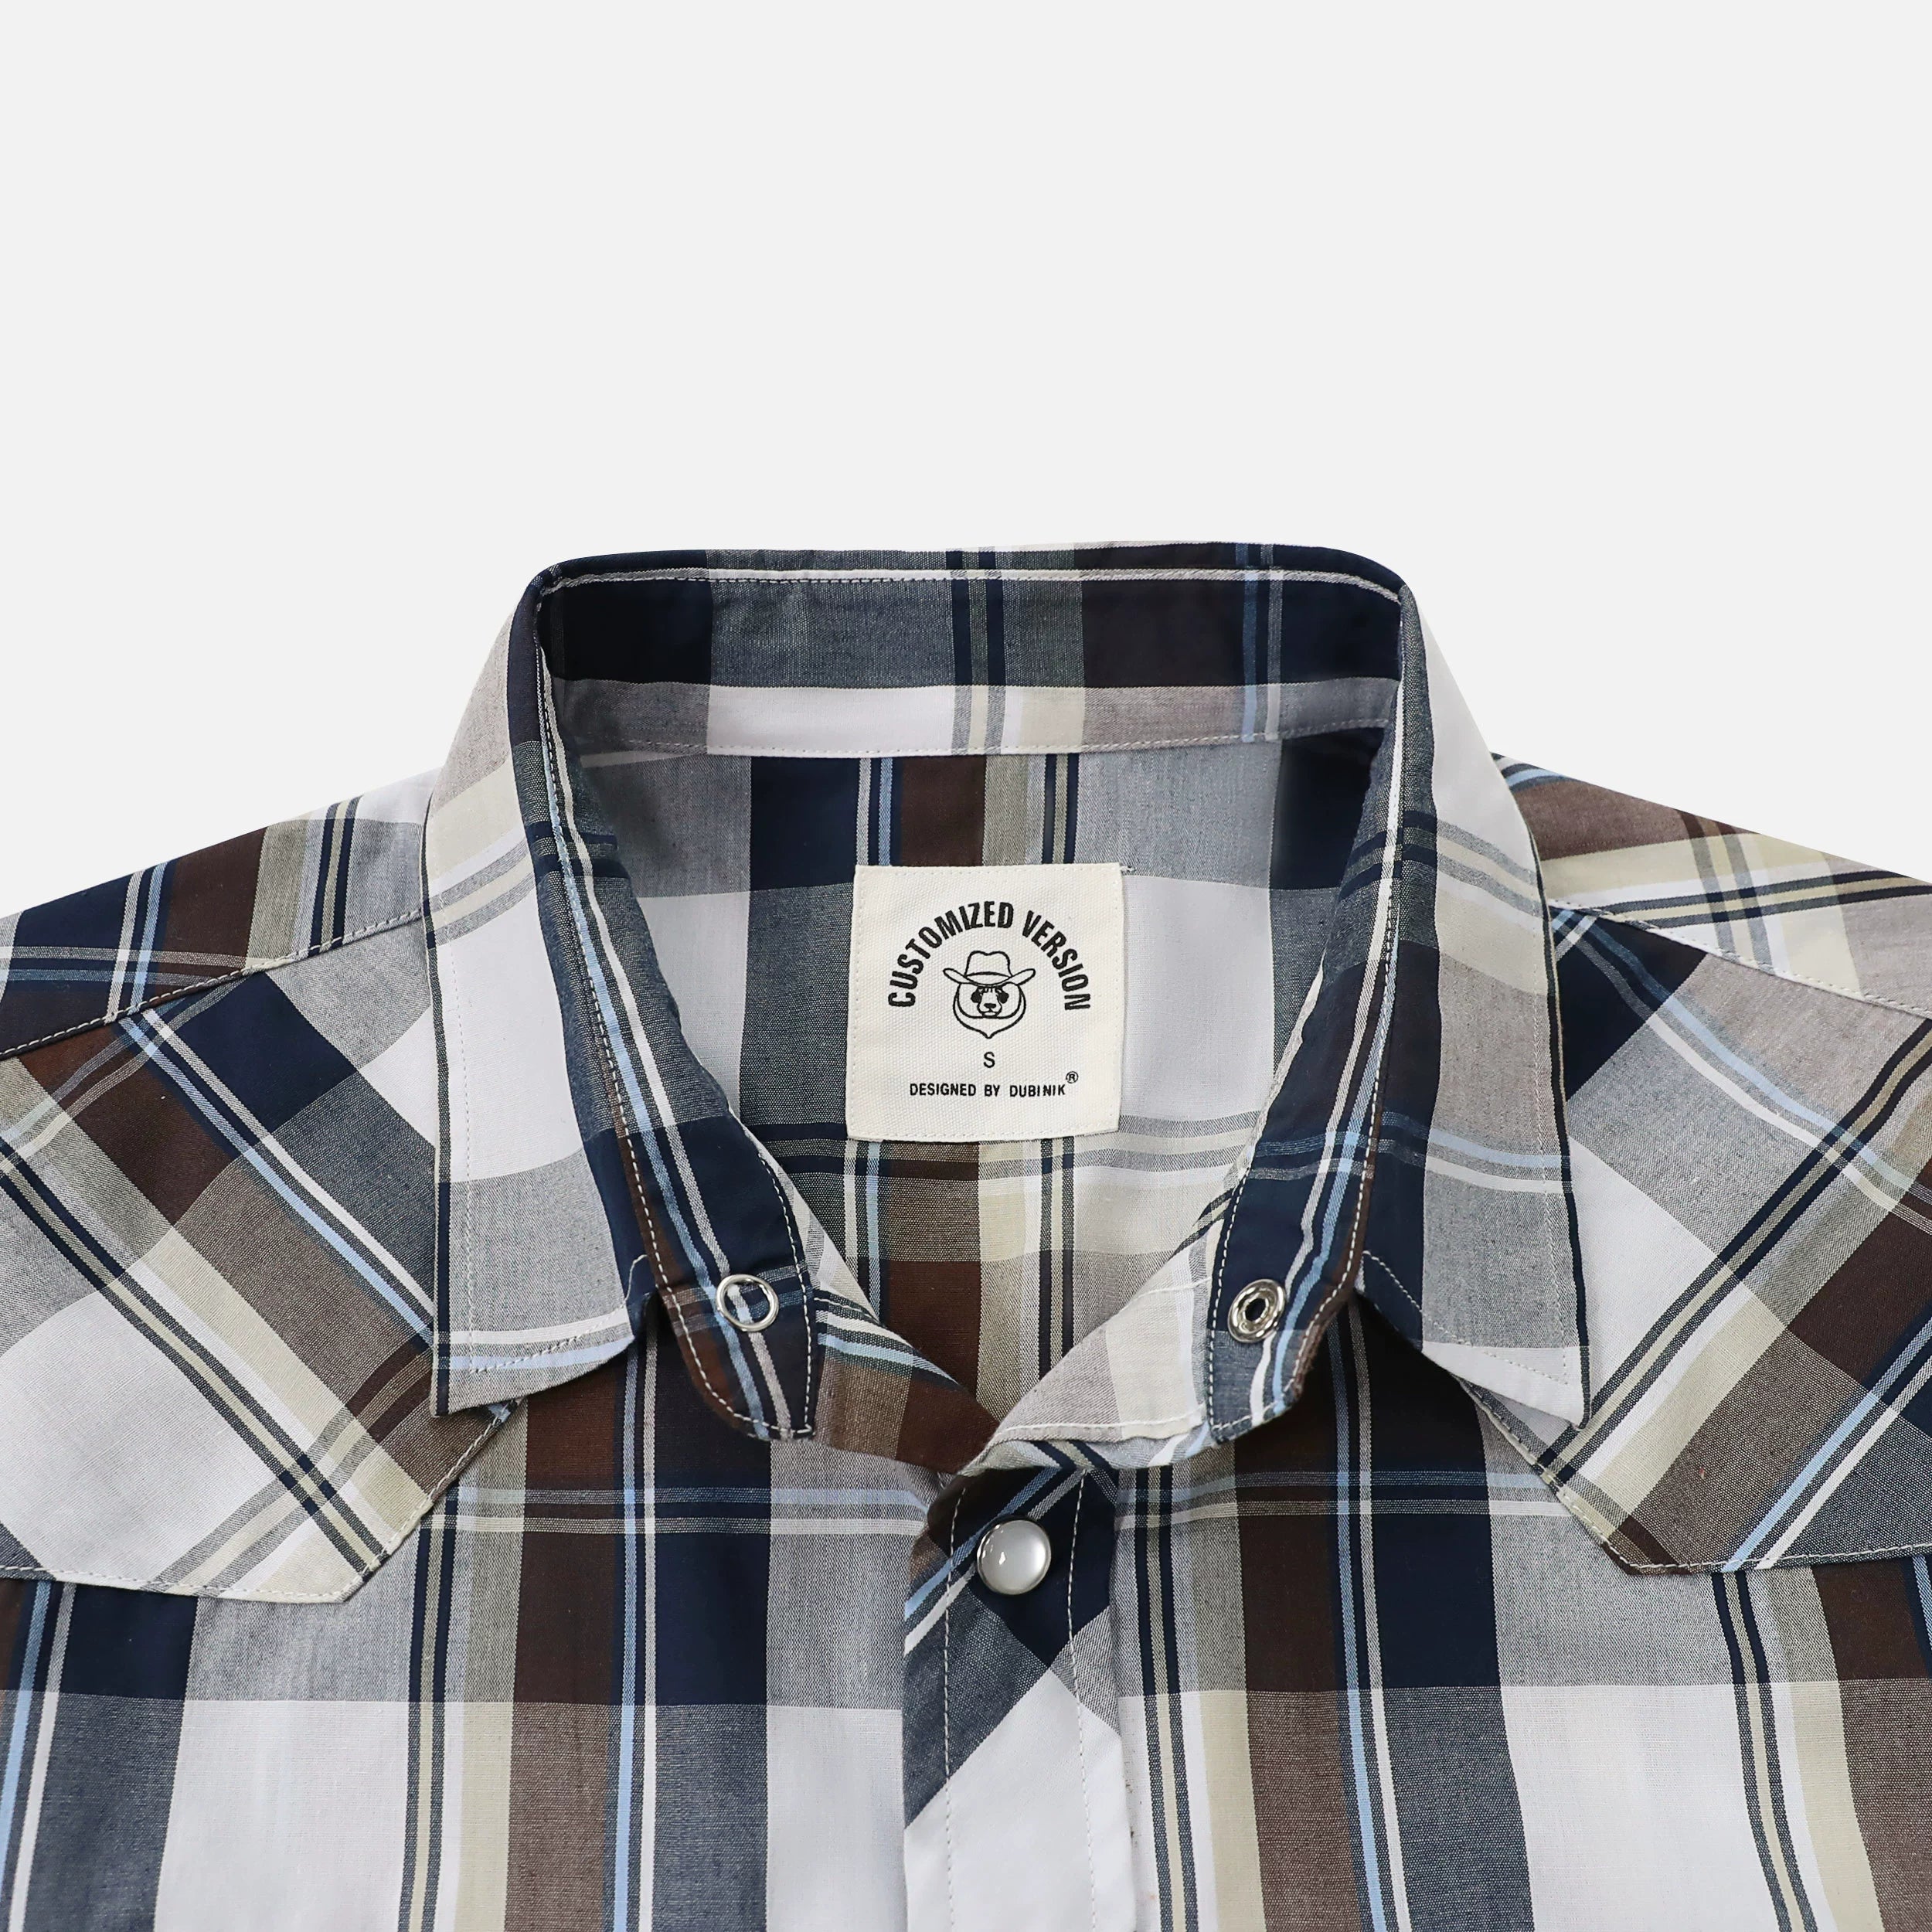 Dubinik® Western Shirts for Men Short Sleeve Plaid Pearl Snap Shirts for Men Button Up Shirt Cowboy Casual Work Shirt#41006